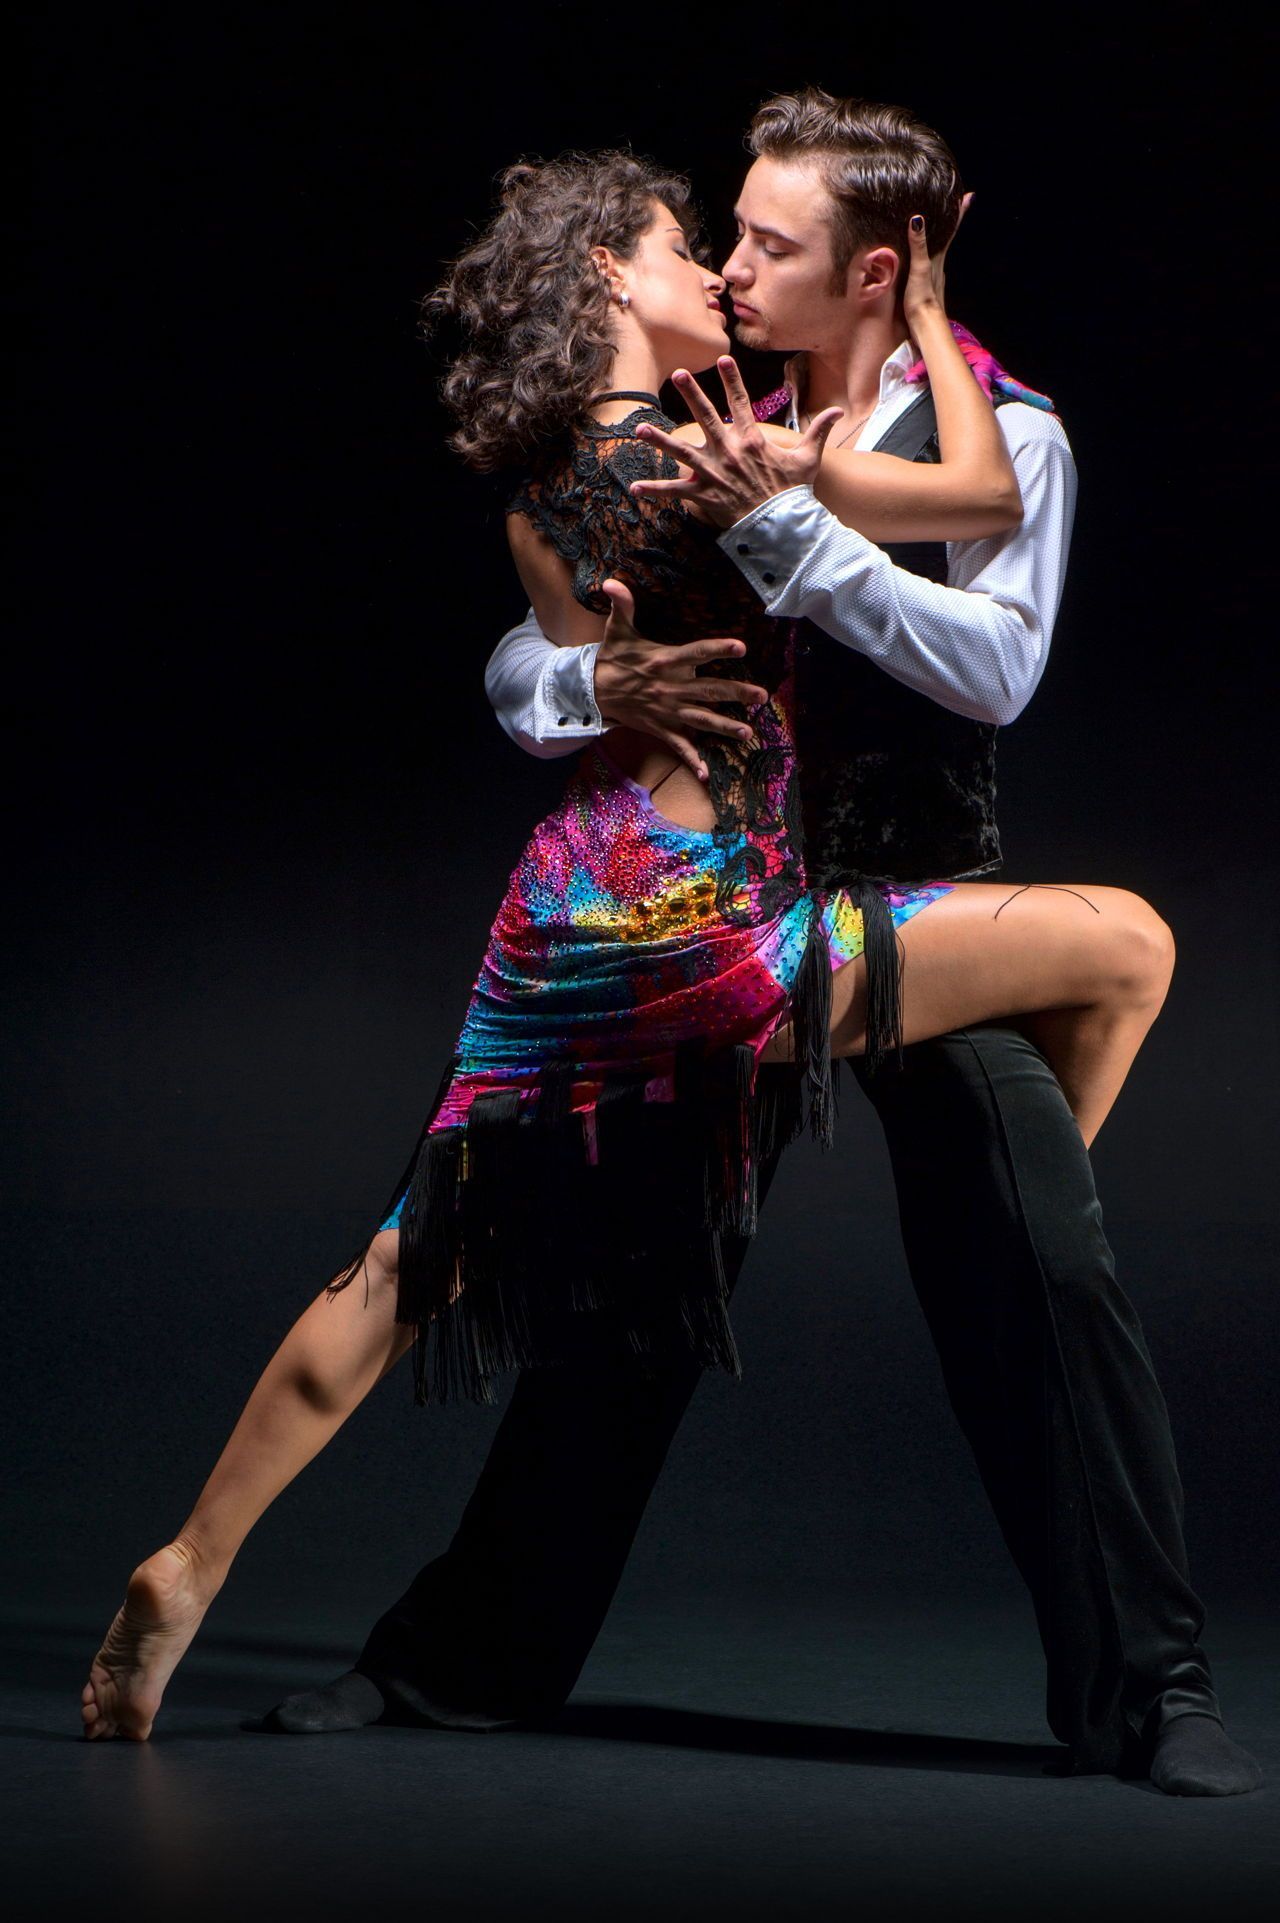 Bachata Dance History. Fotografía de danza